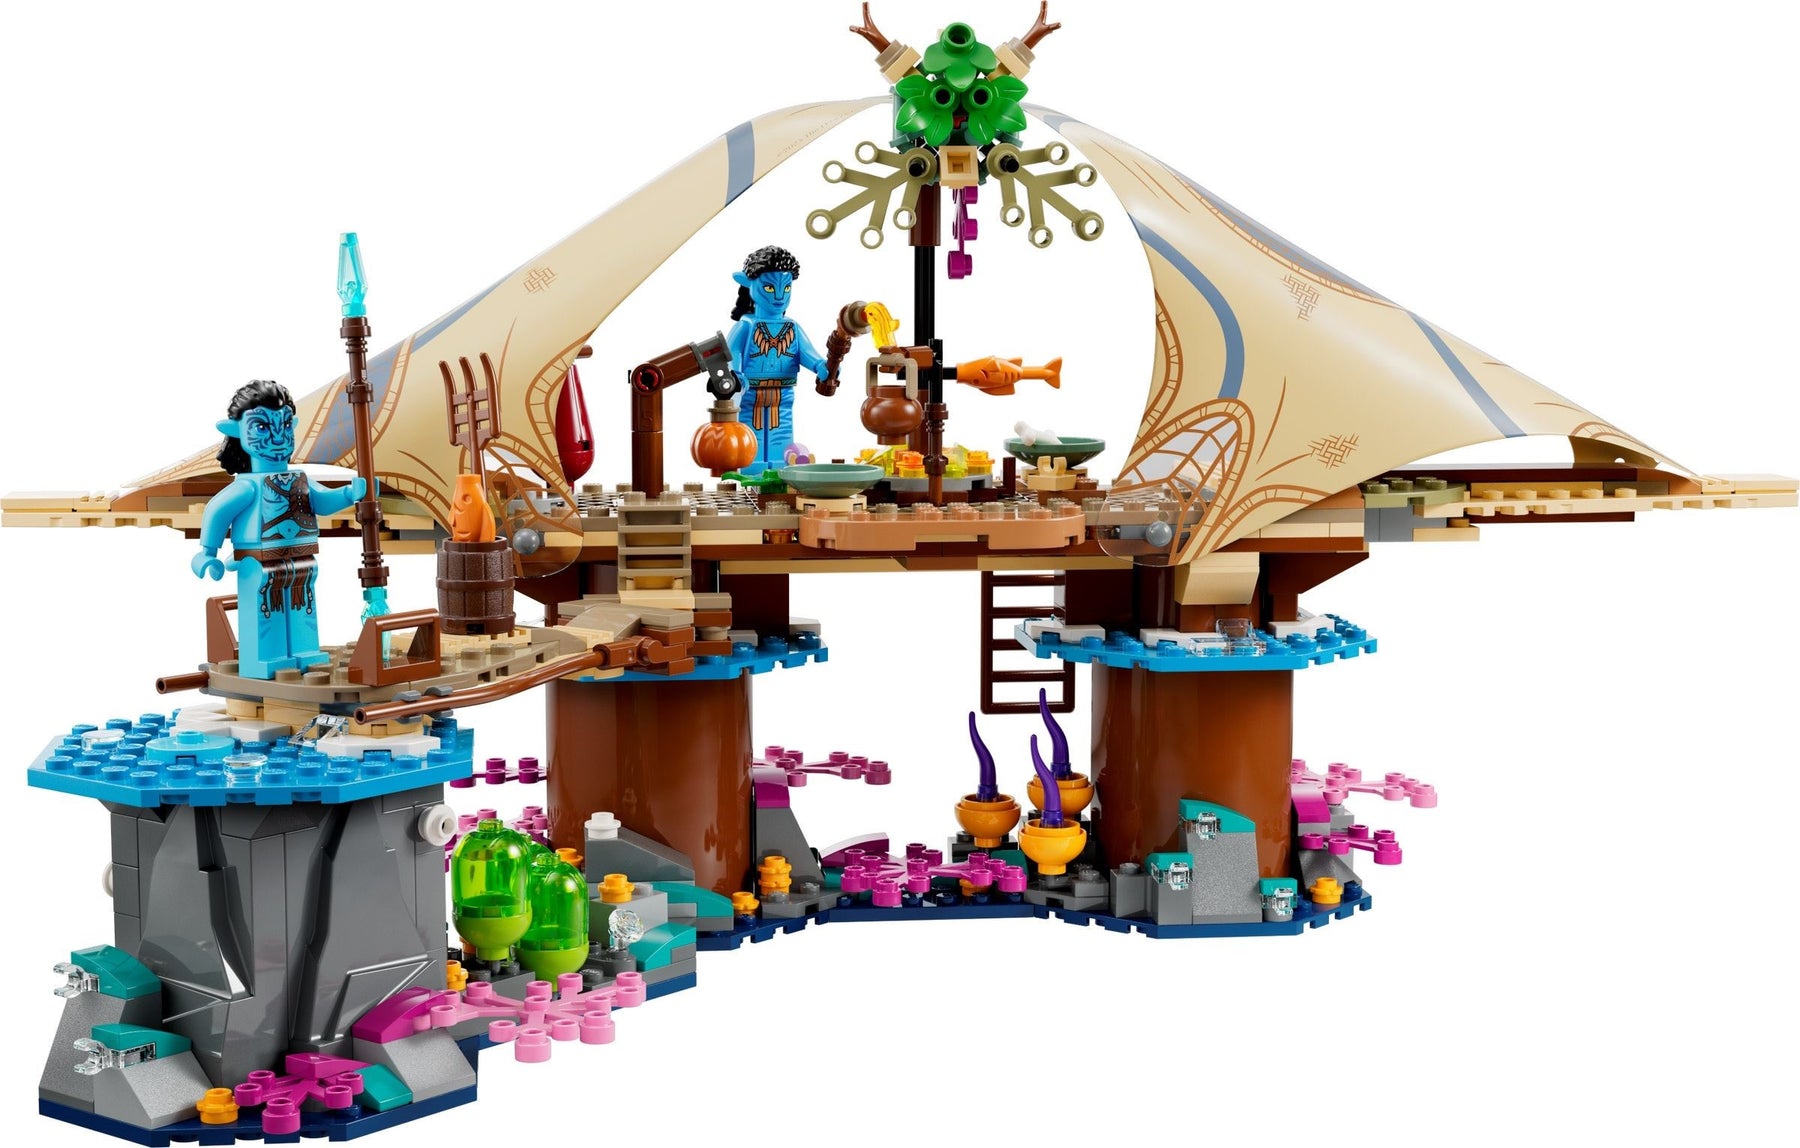 LEGO Avatar 75578 Metkayinan Koti Riutalla